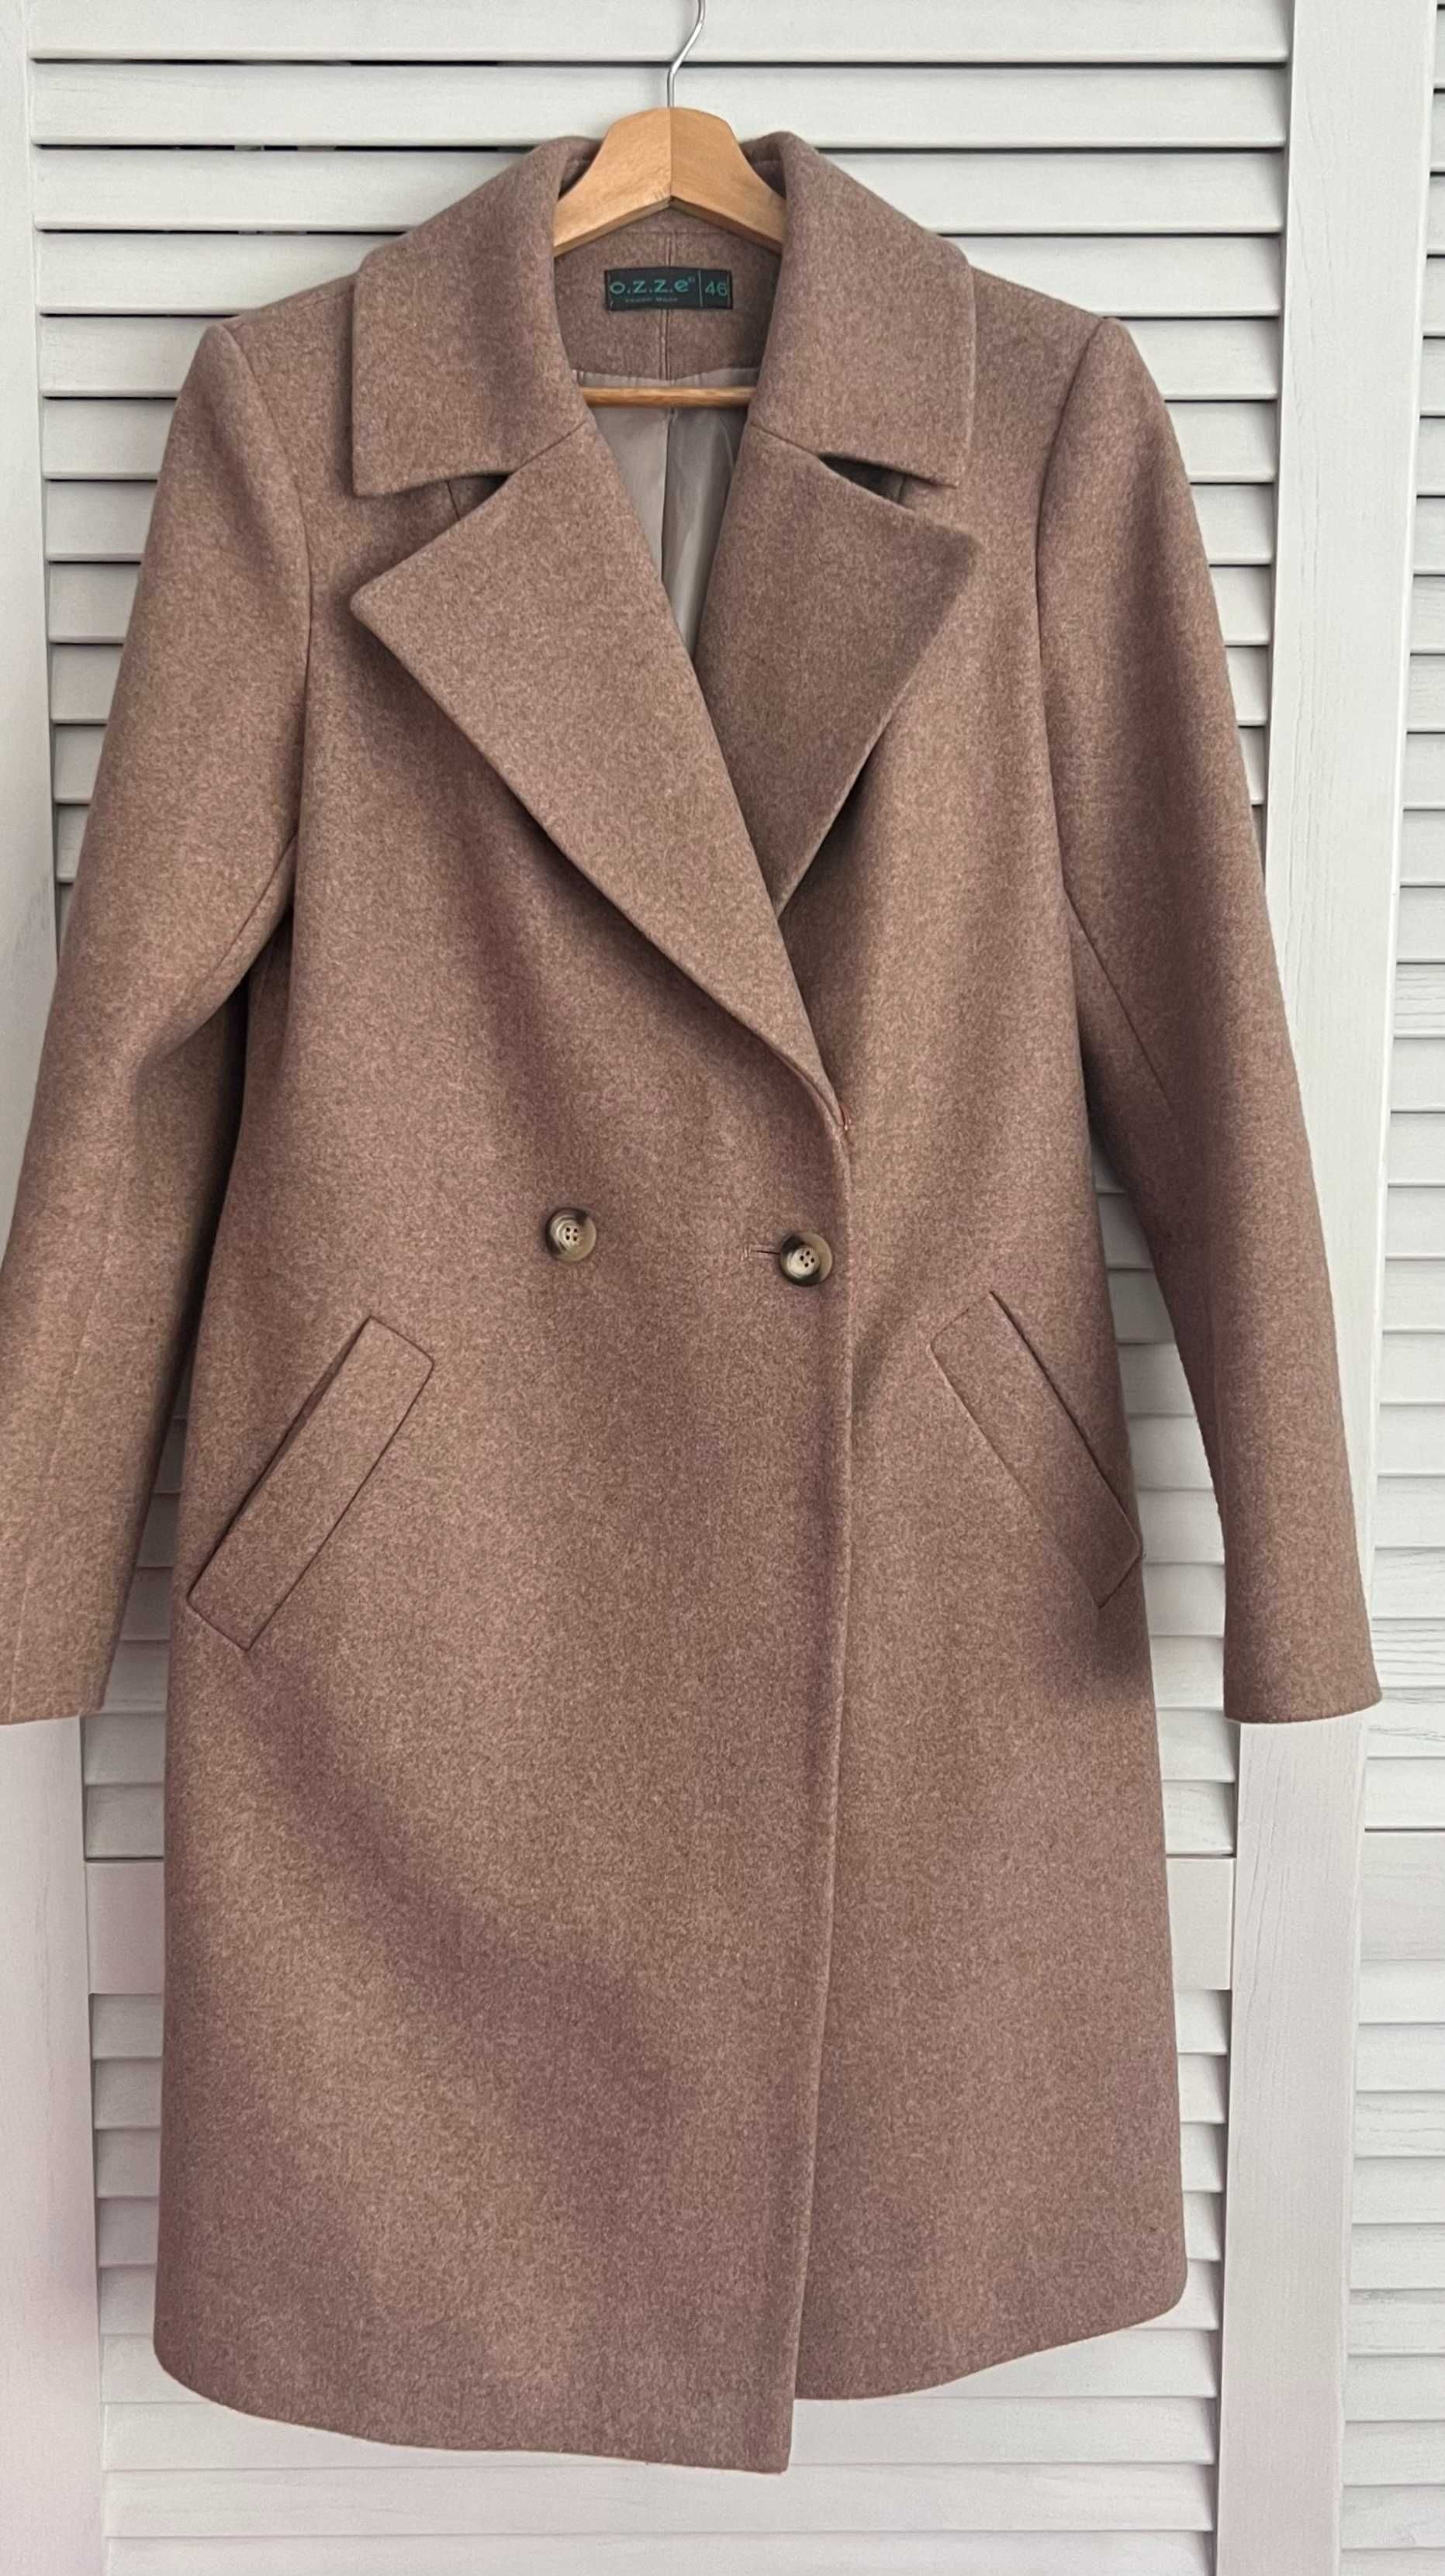 Жіноче пальто бежево-коричневого кольору.